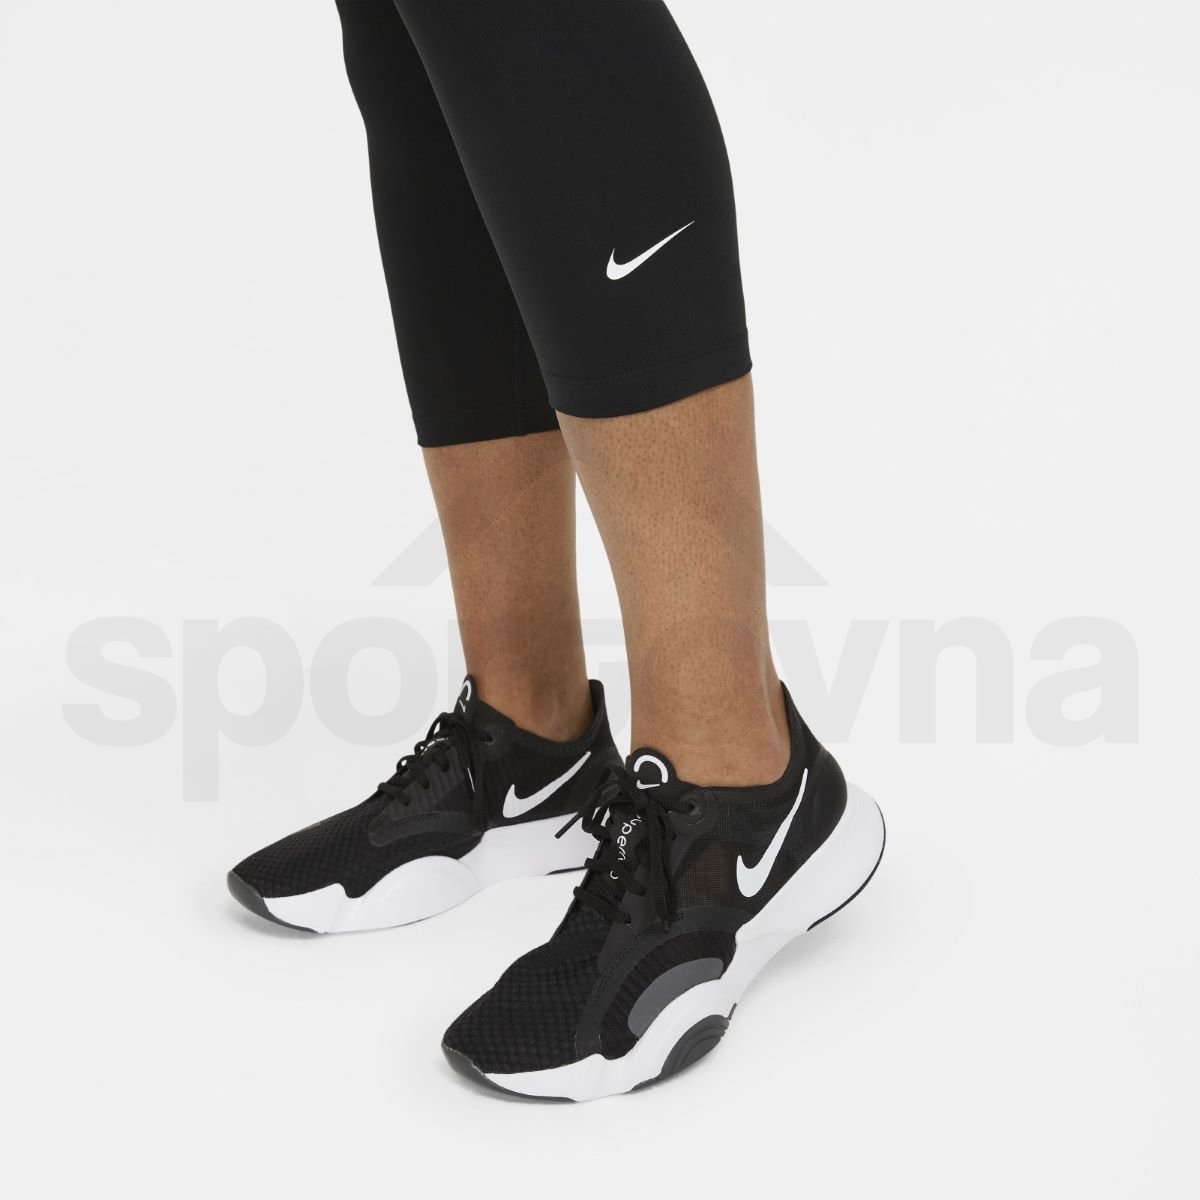 Legíny Nike One W - černá